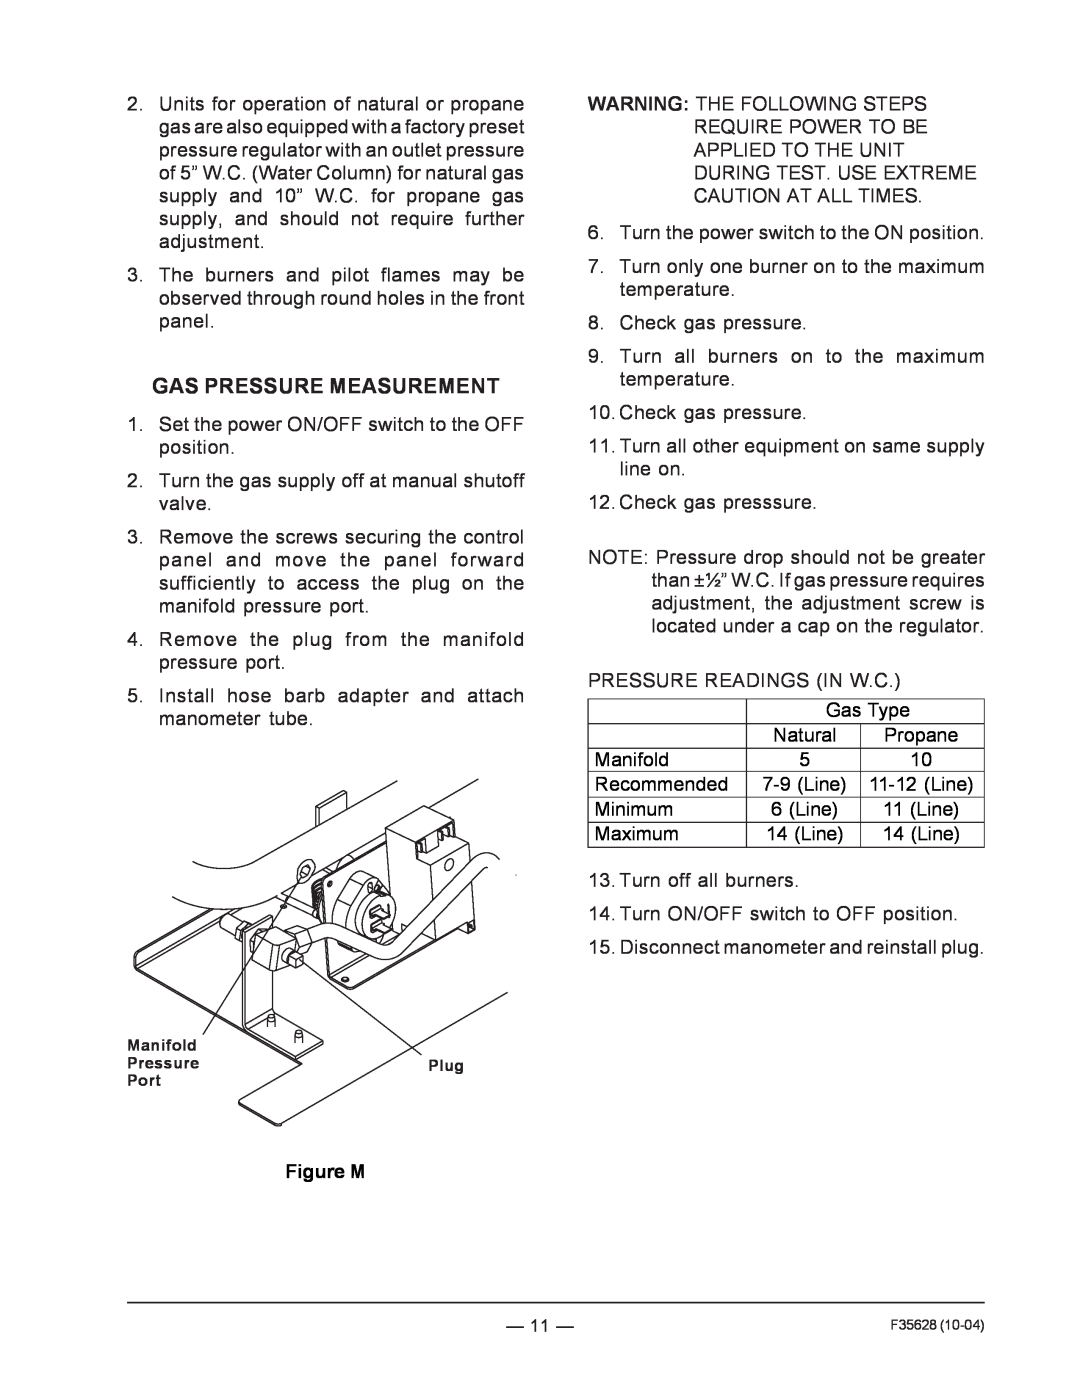 Vulcan-Hart service manual Gas Pressure Measurement, Figure M 